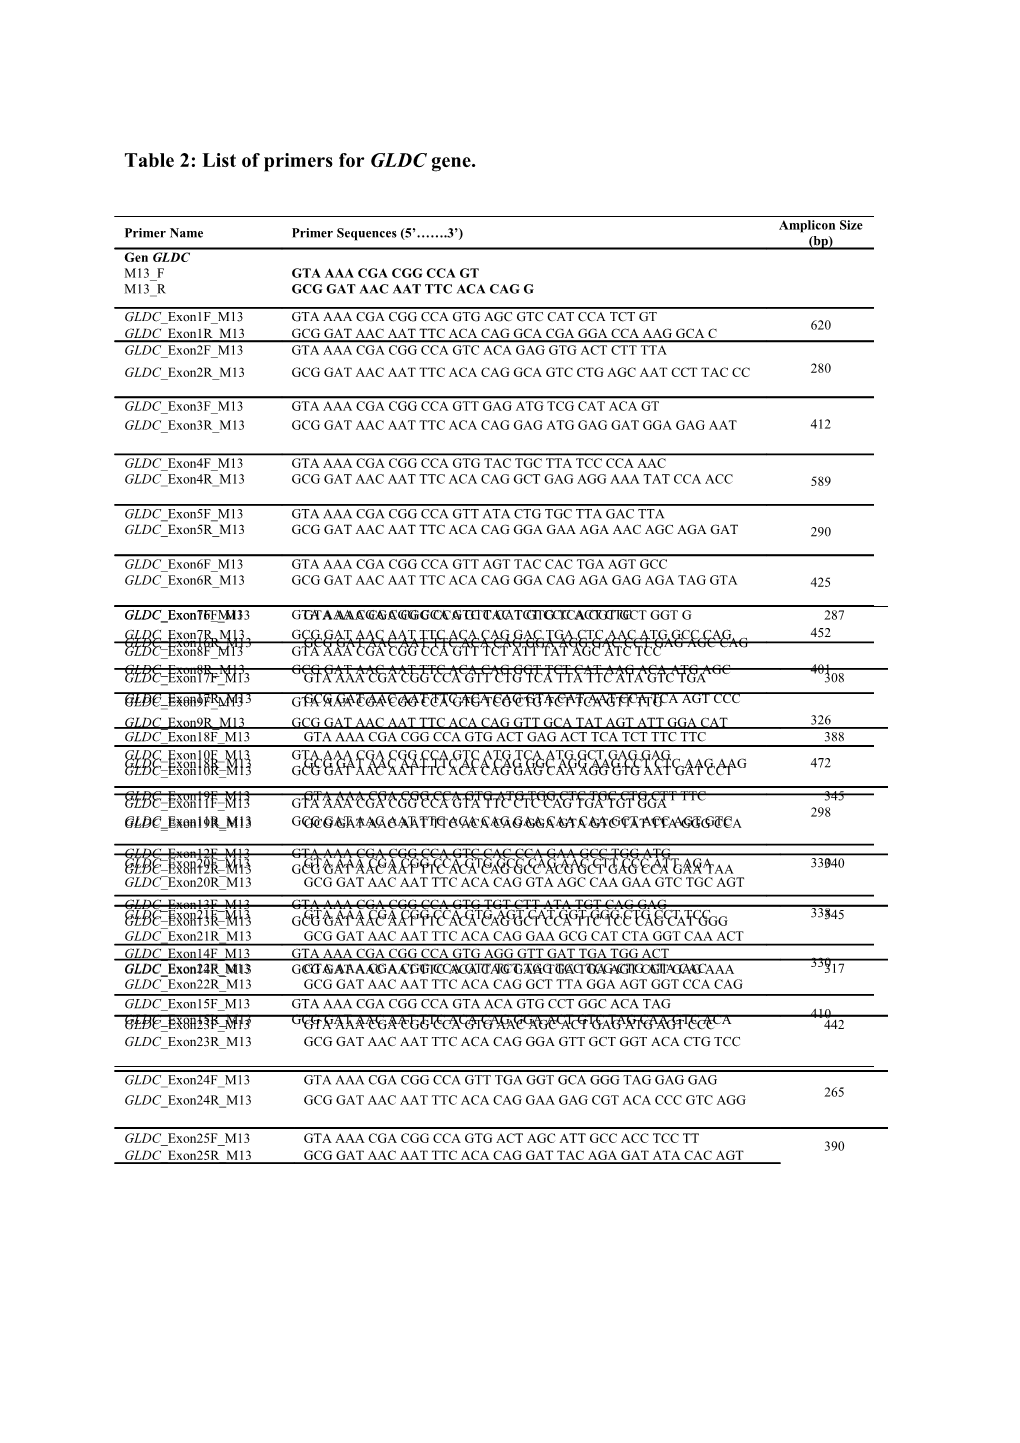 Table 2: List of Primers for GLDC Gene